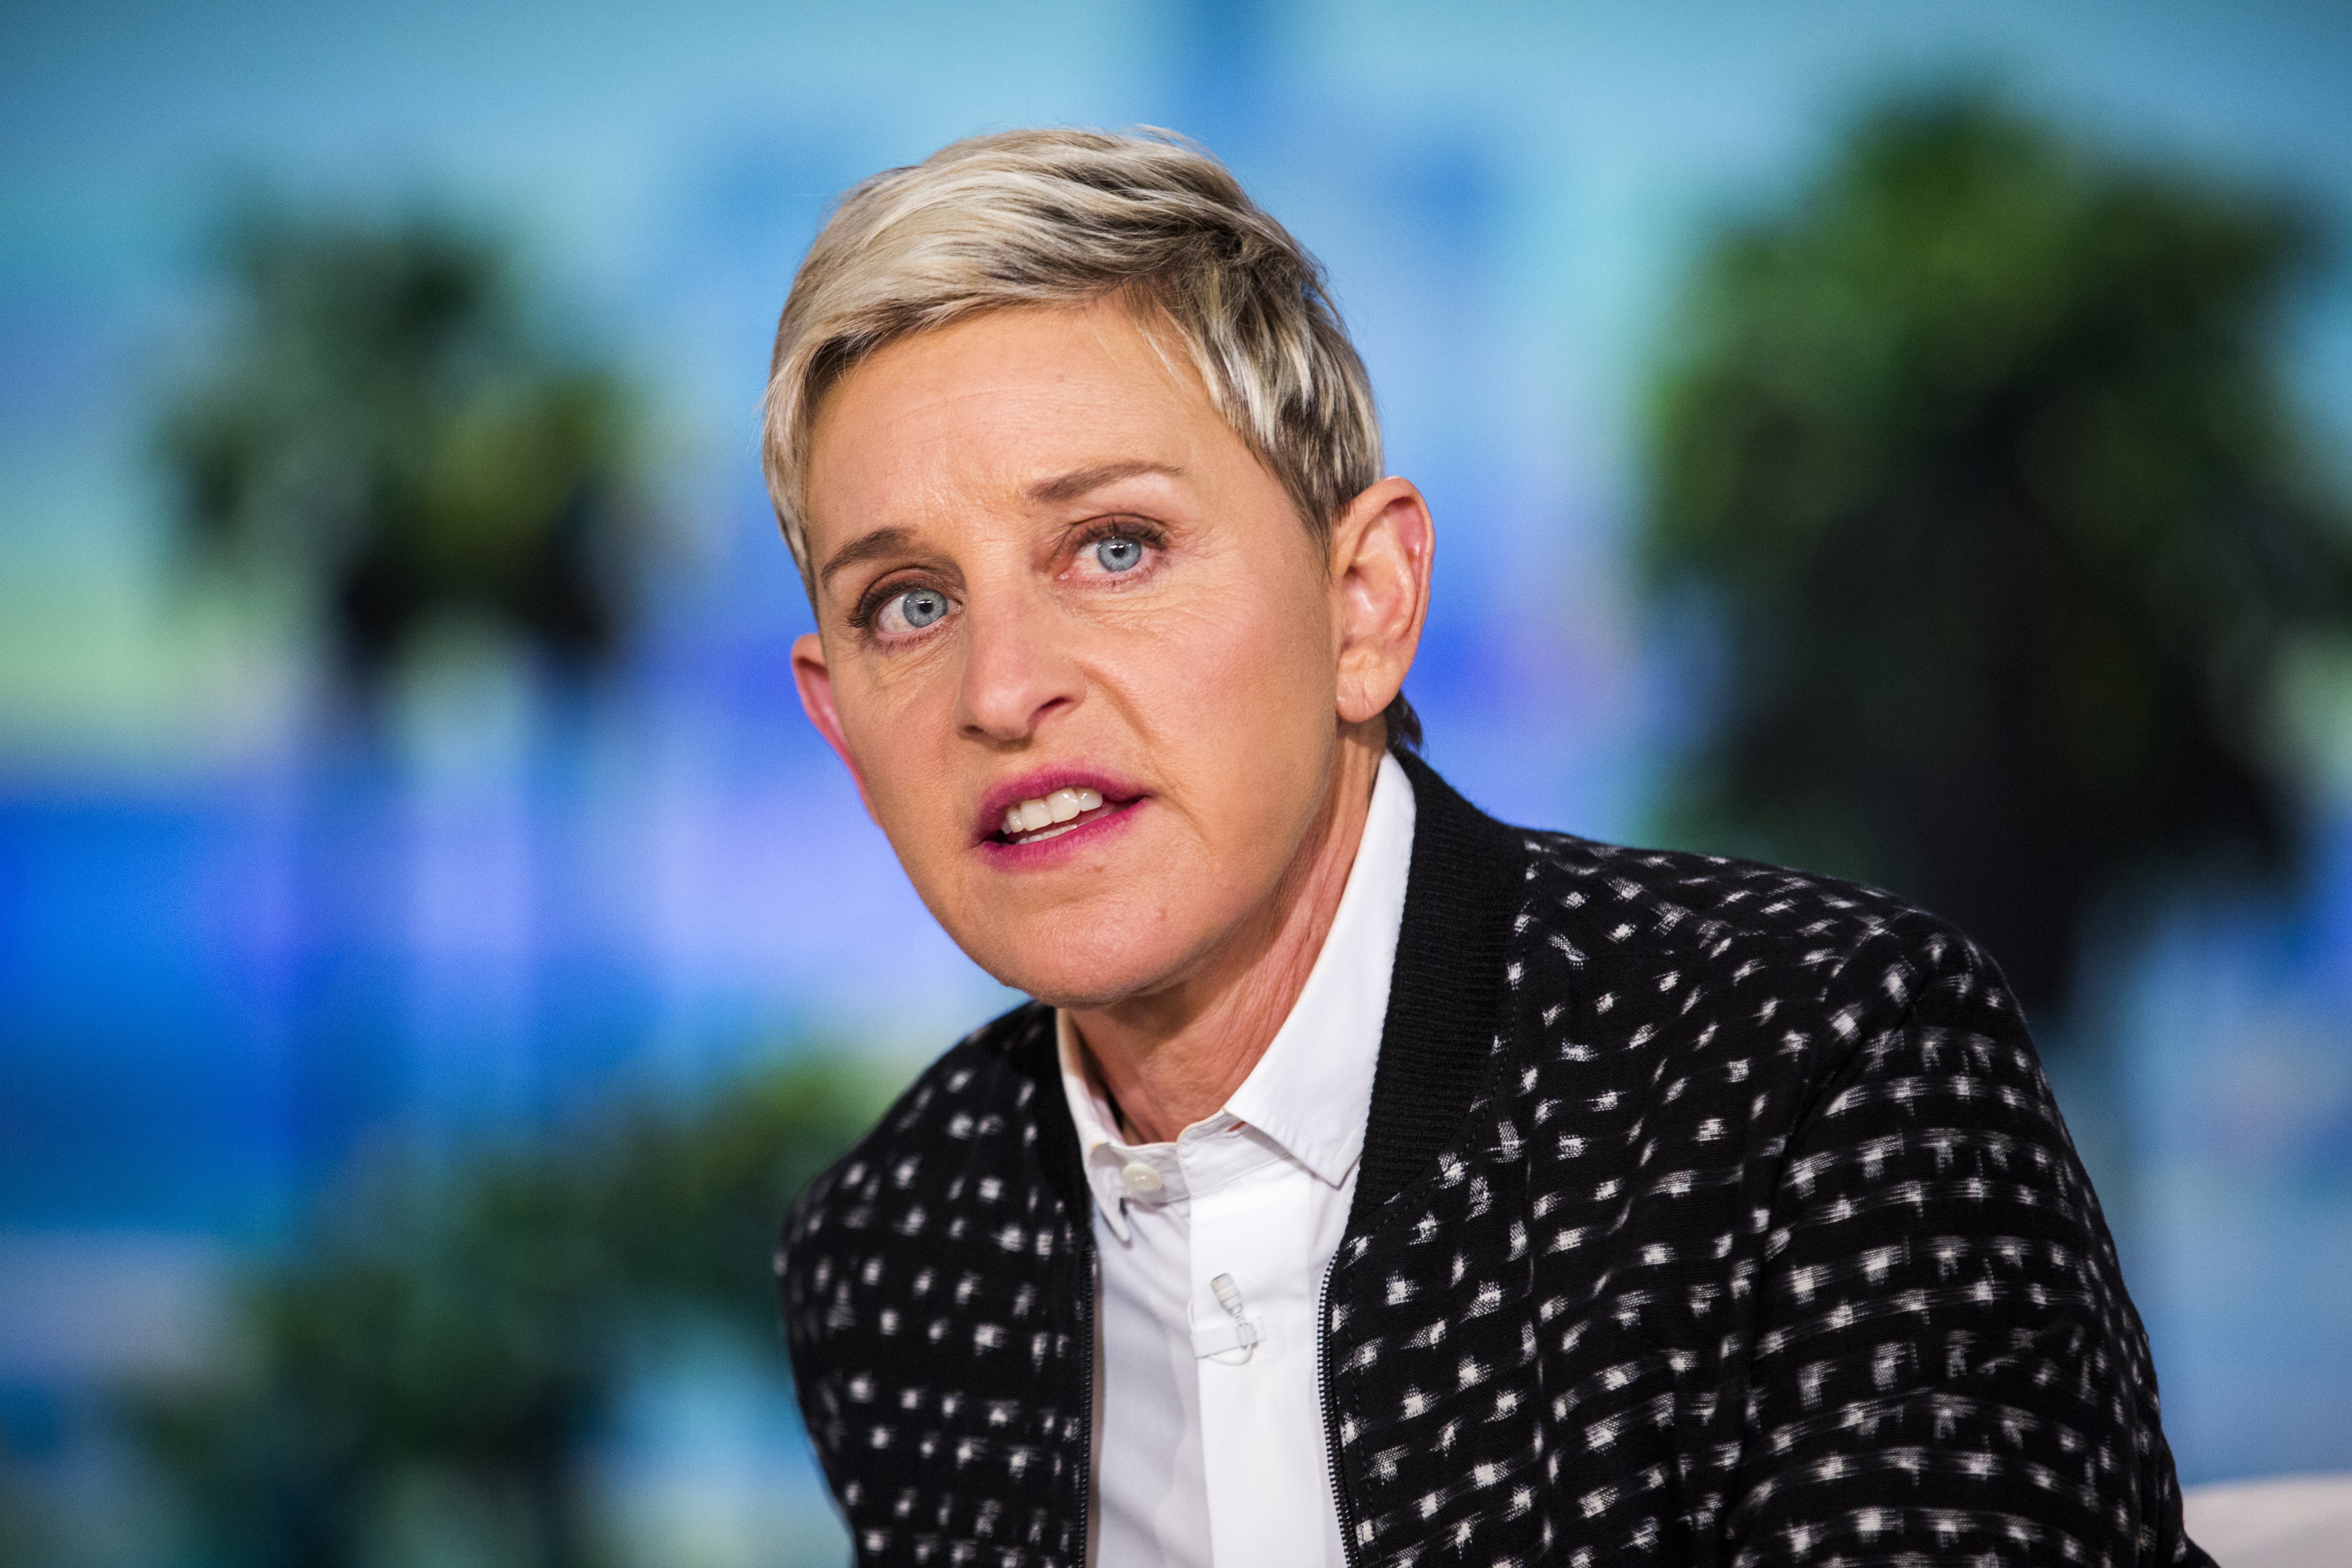 Ellen DeGeneres during a taping of The Ellen DeGeneres Show, on May 24, 2016 in Burbank, California | Photo: Getty Images